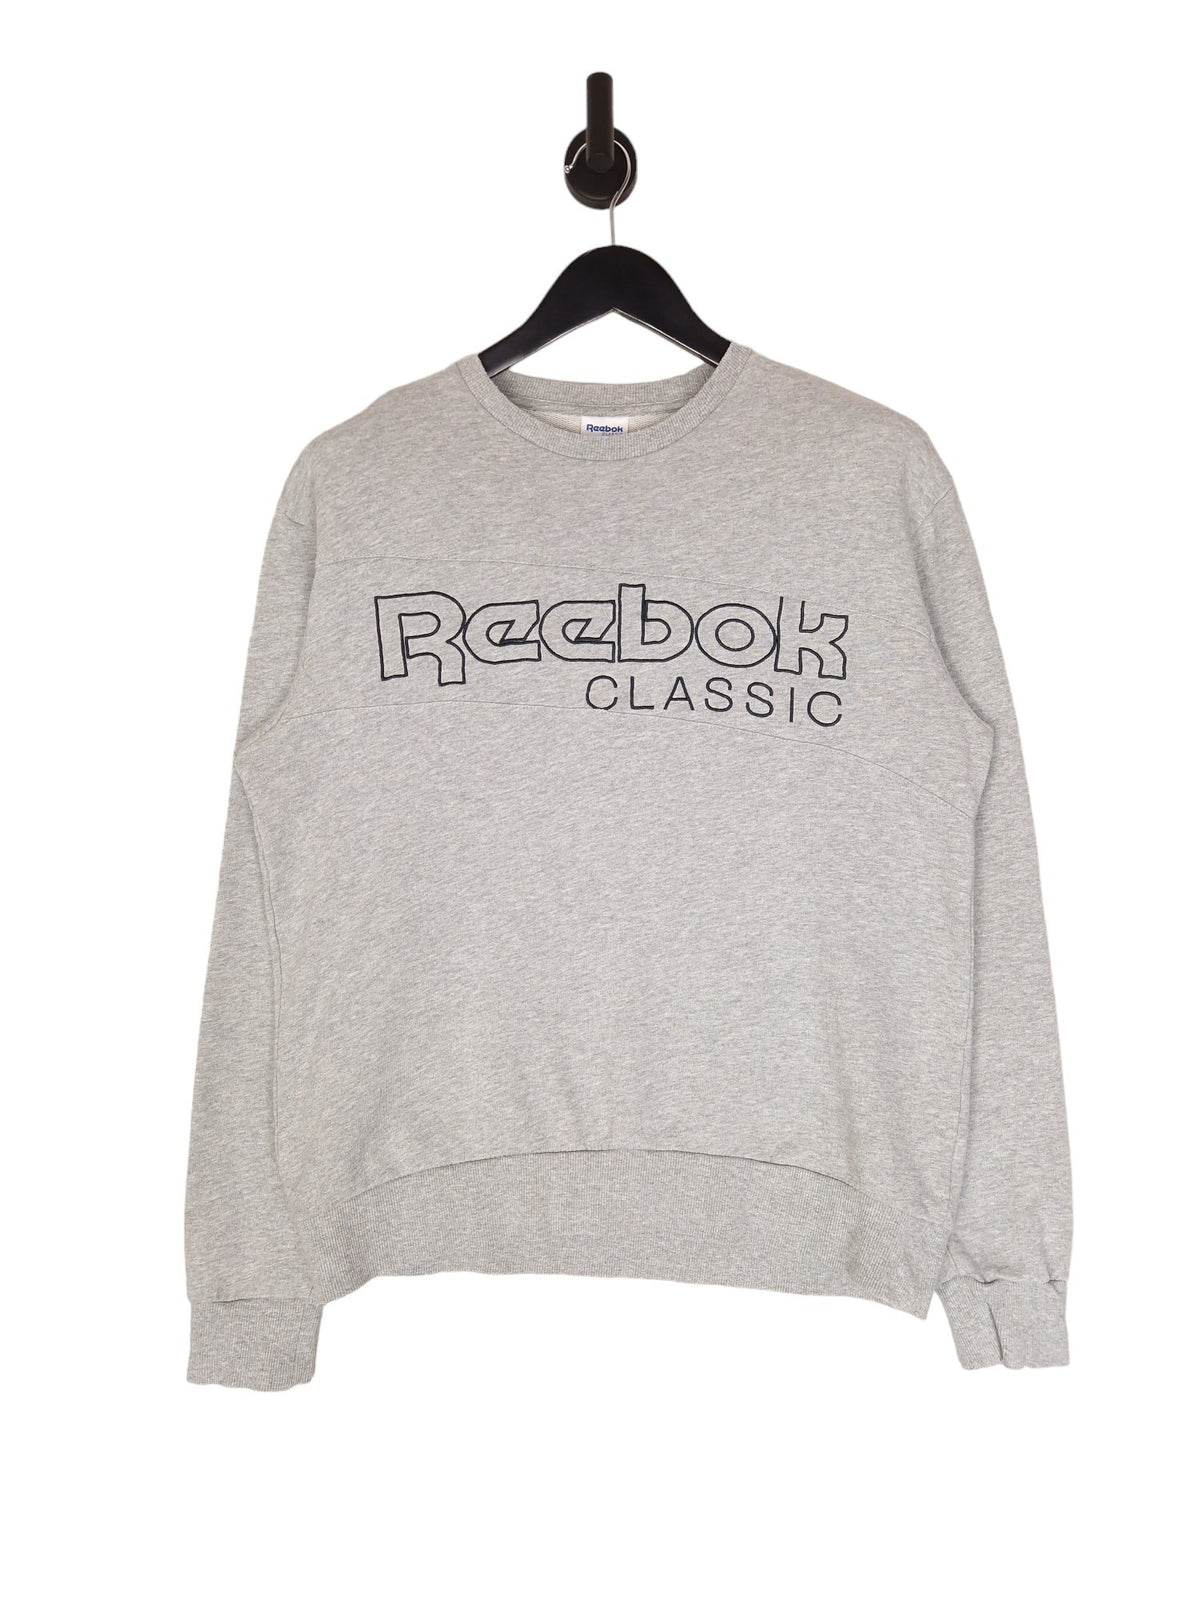 Reebok Classic Spell Out Sweatshirt - Size Medium